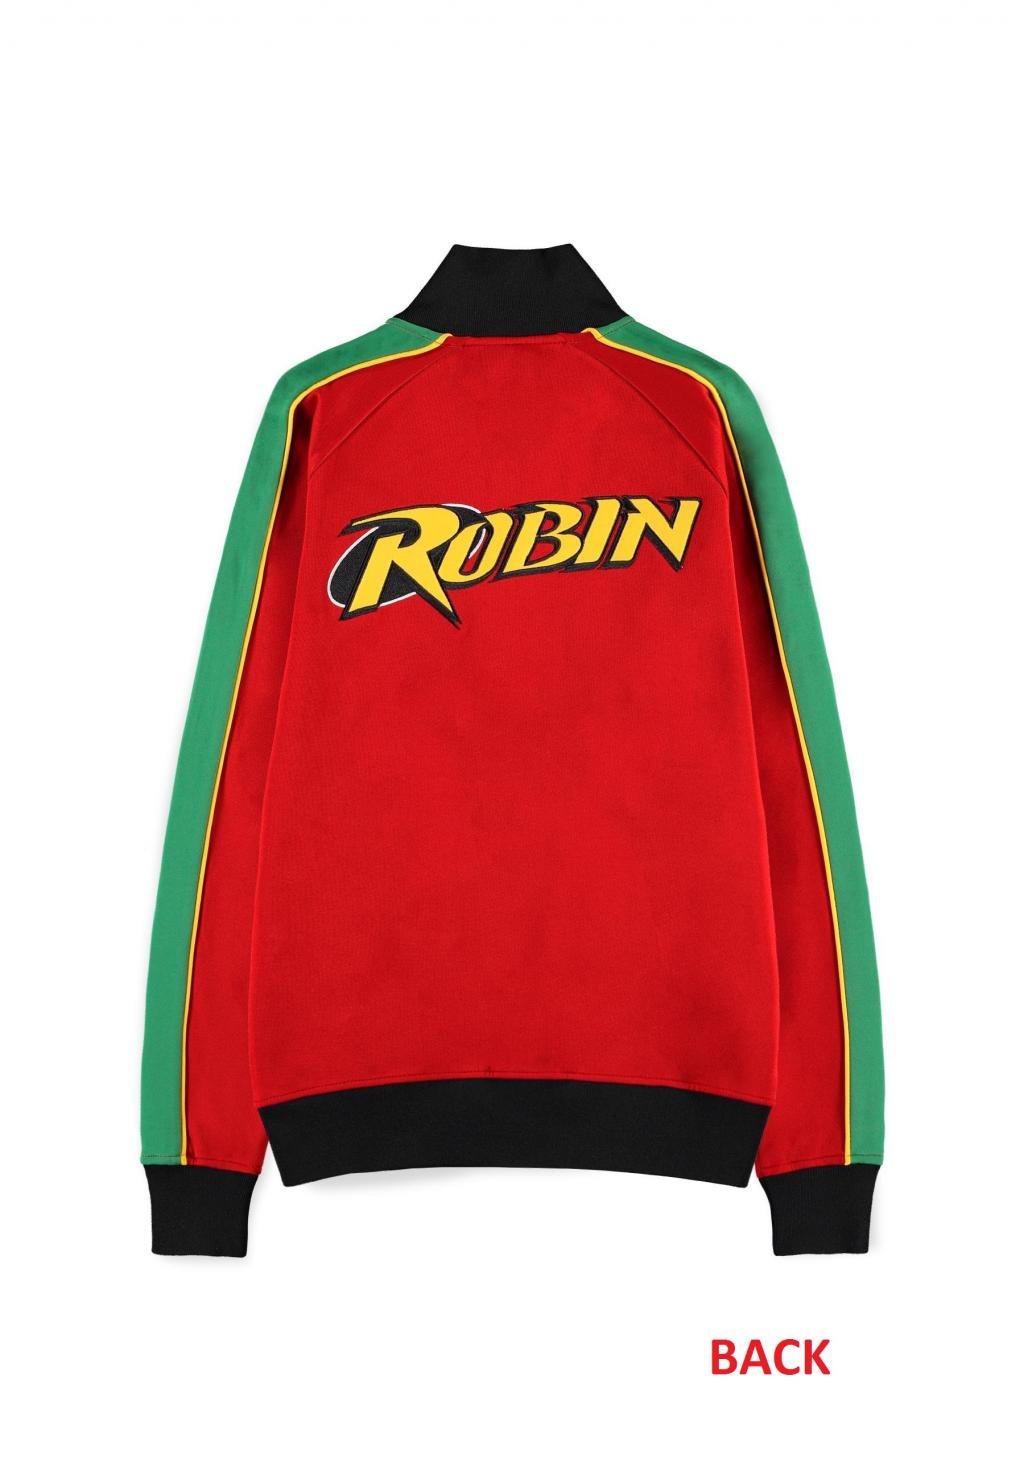 GOTHAM KNIGHTS - Robin - Men's Track Jacket (S)